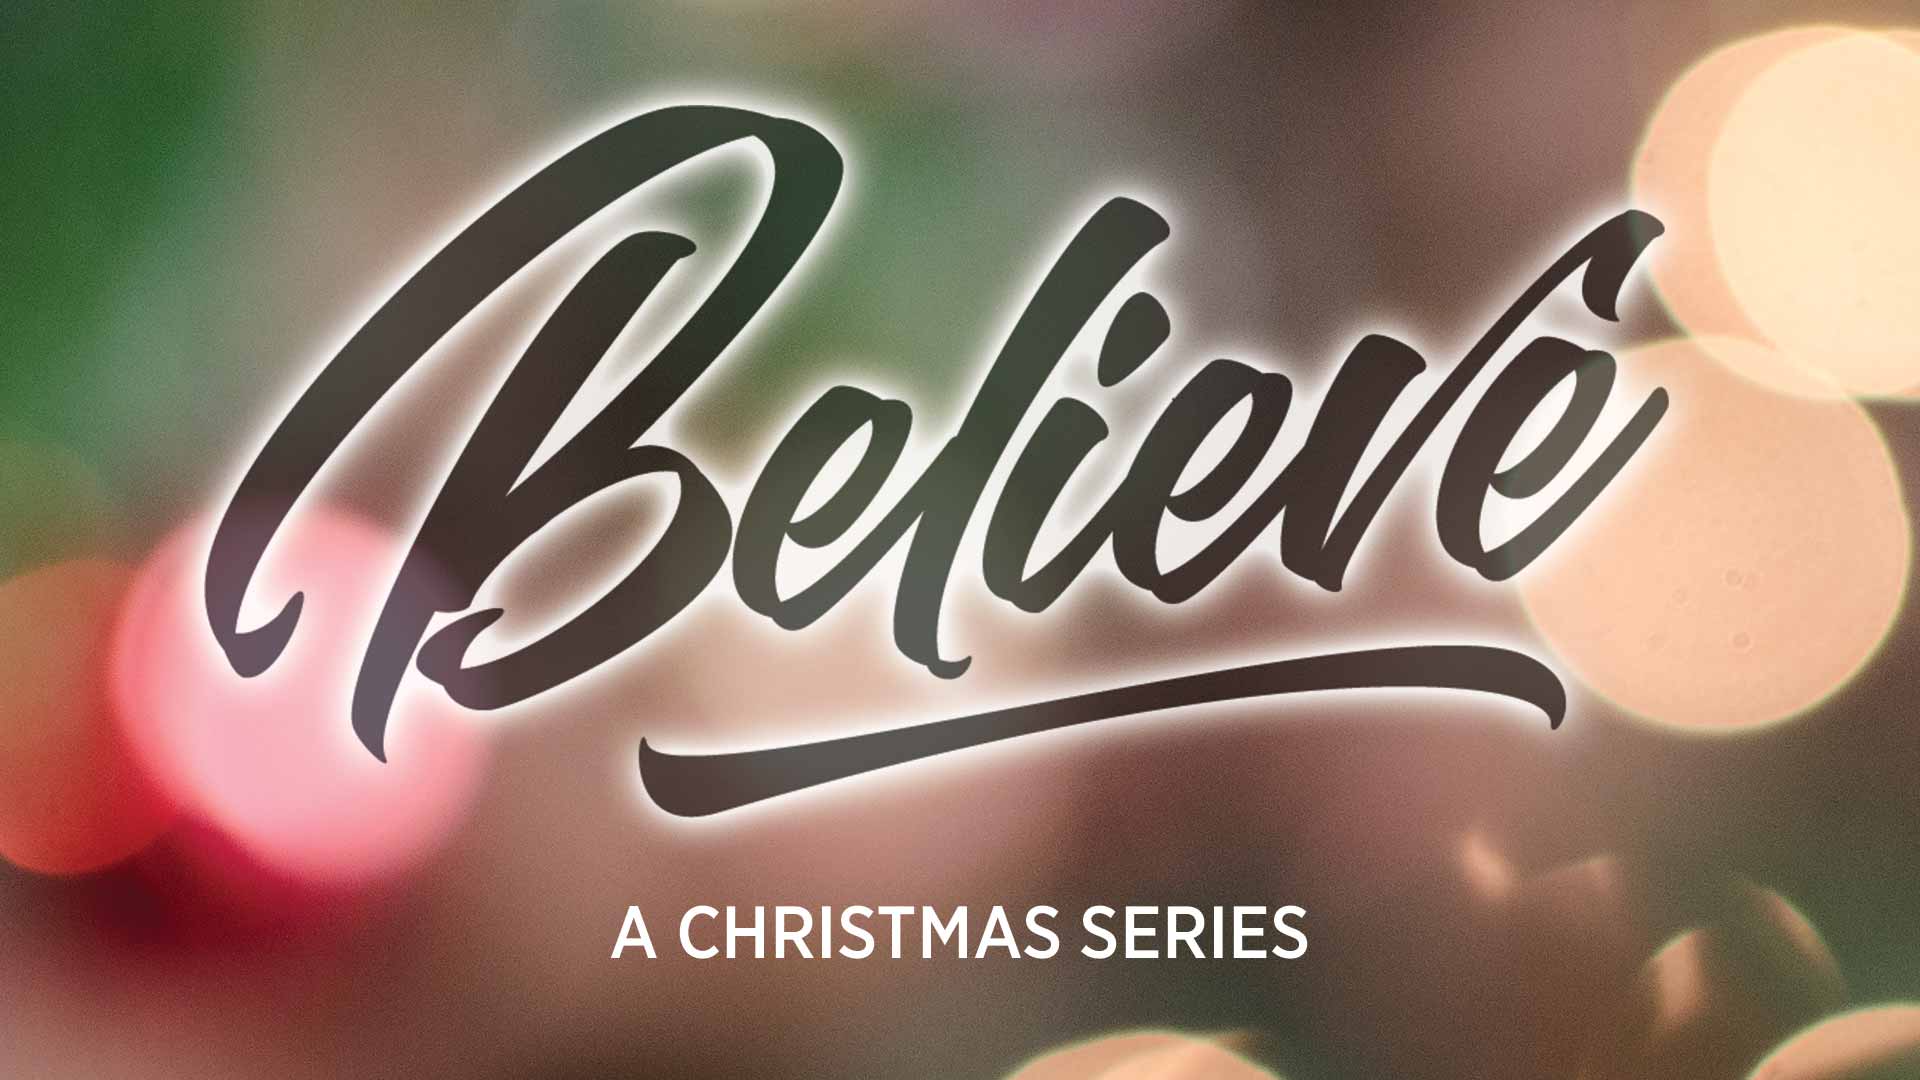 Believe (I Believe in Christmas)